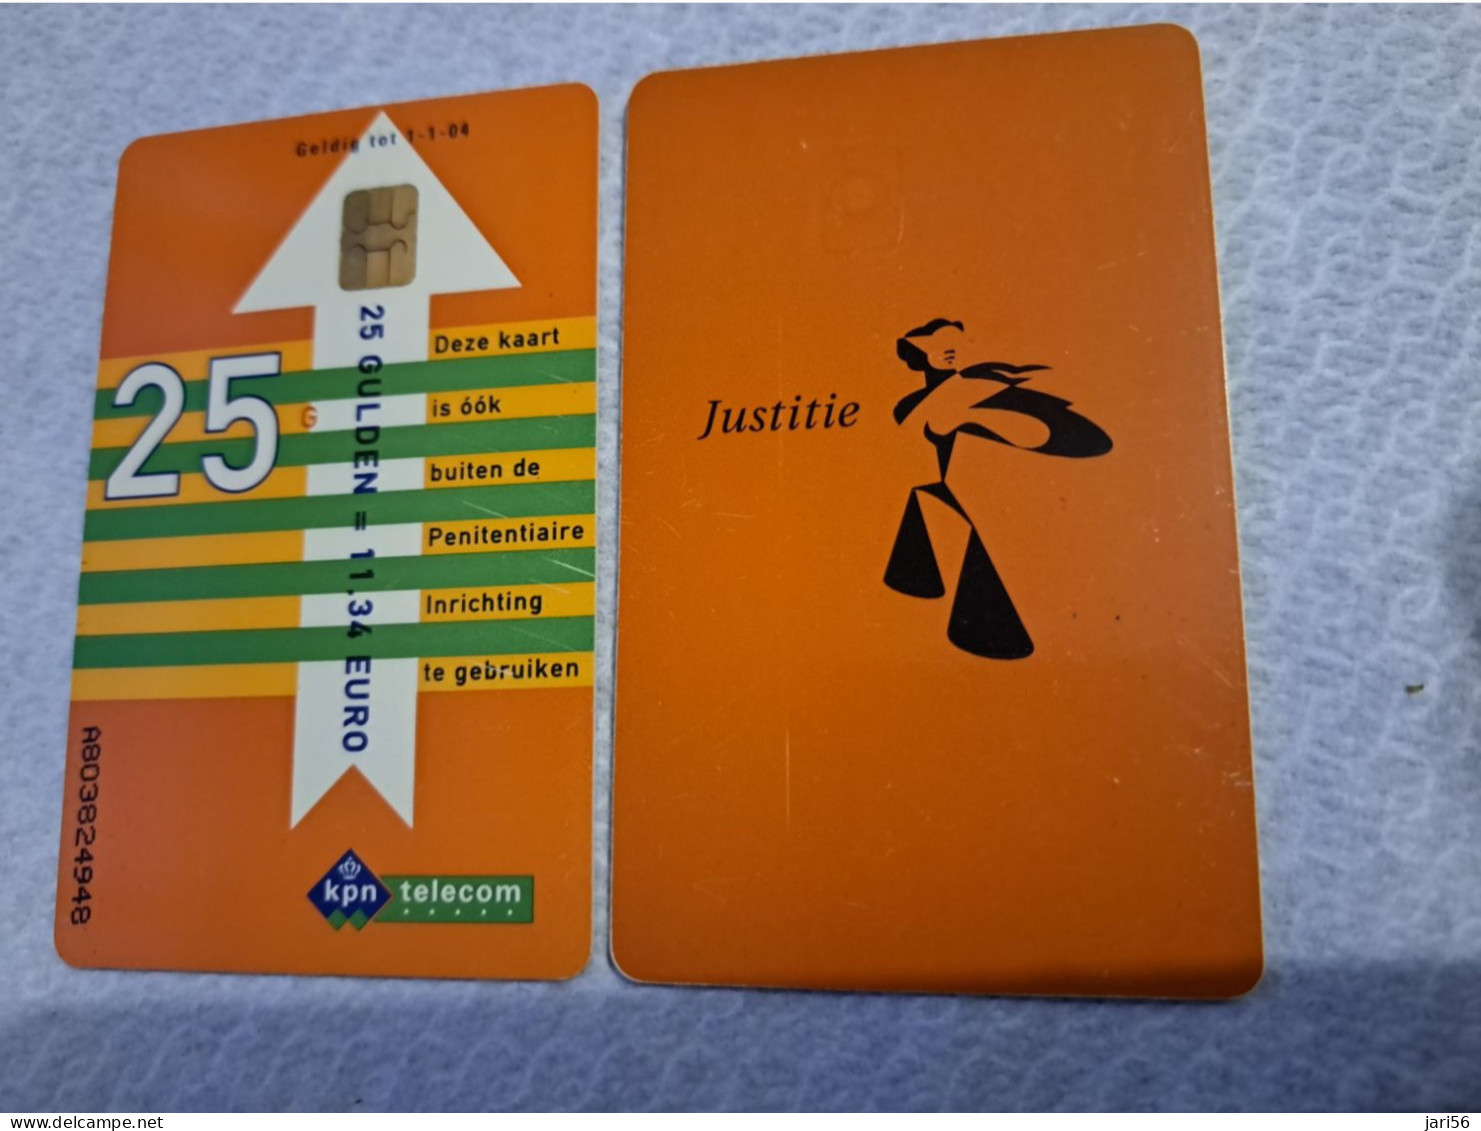 NETHERLANDS   HFL 25,-  / USED  / DATE  1-1-04  JUSTITIE/PRISON CARD  CHIP CARD/ USED   ** 16158** - [3] Tarjetas Móvil, Prepagadas Y Recargos